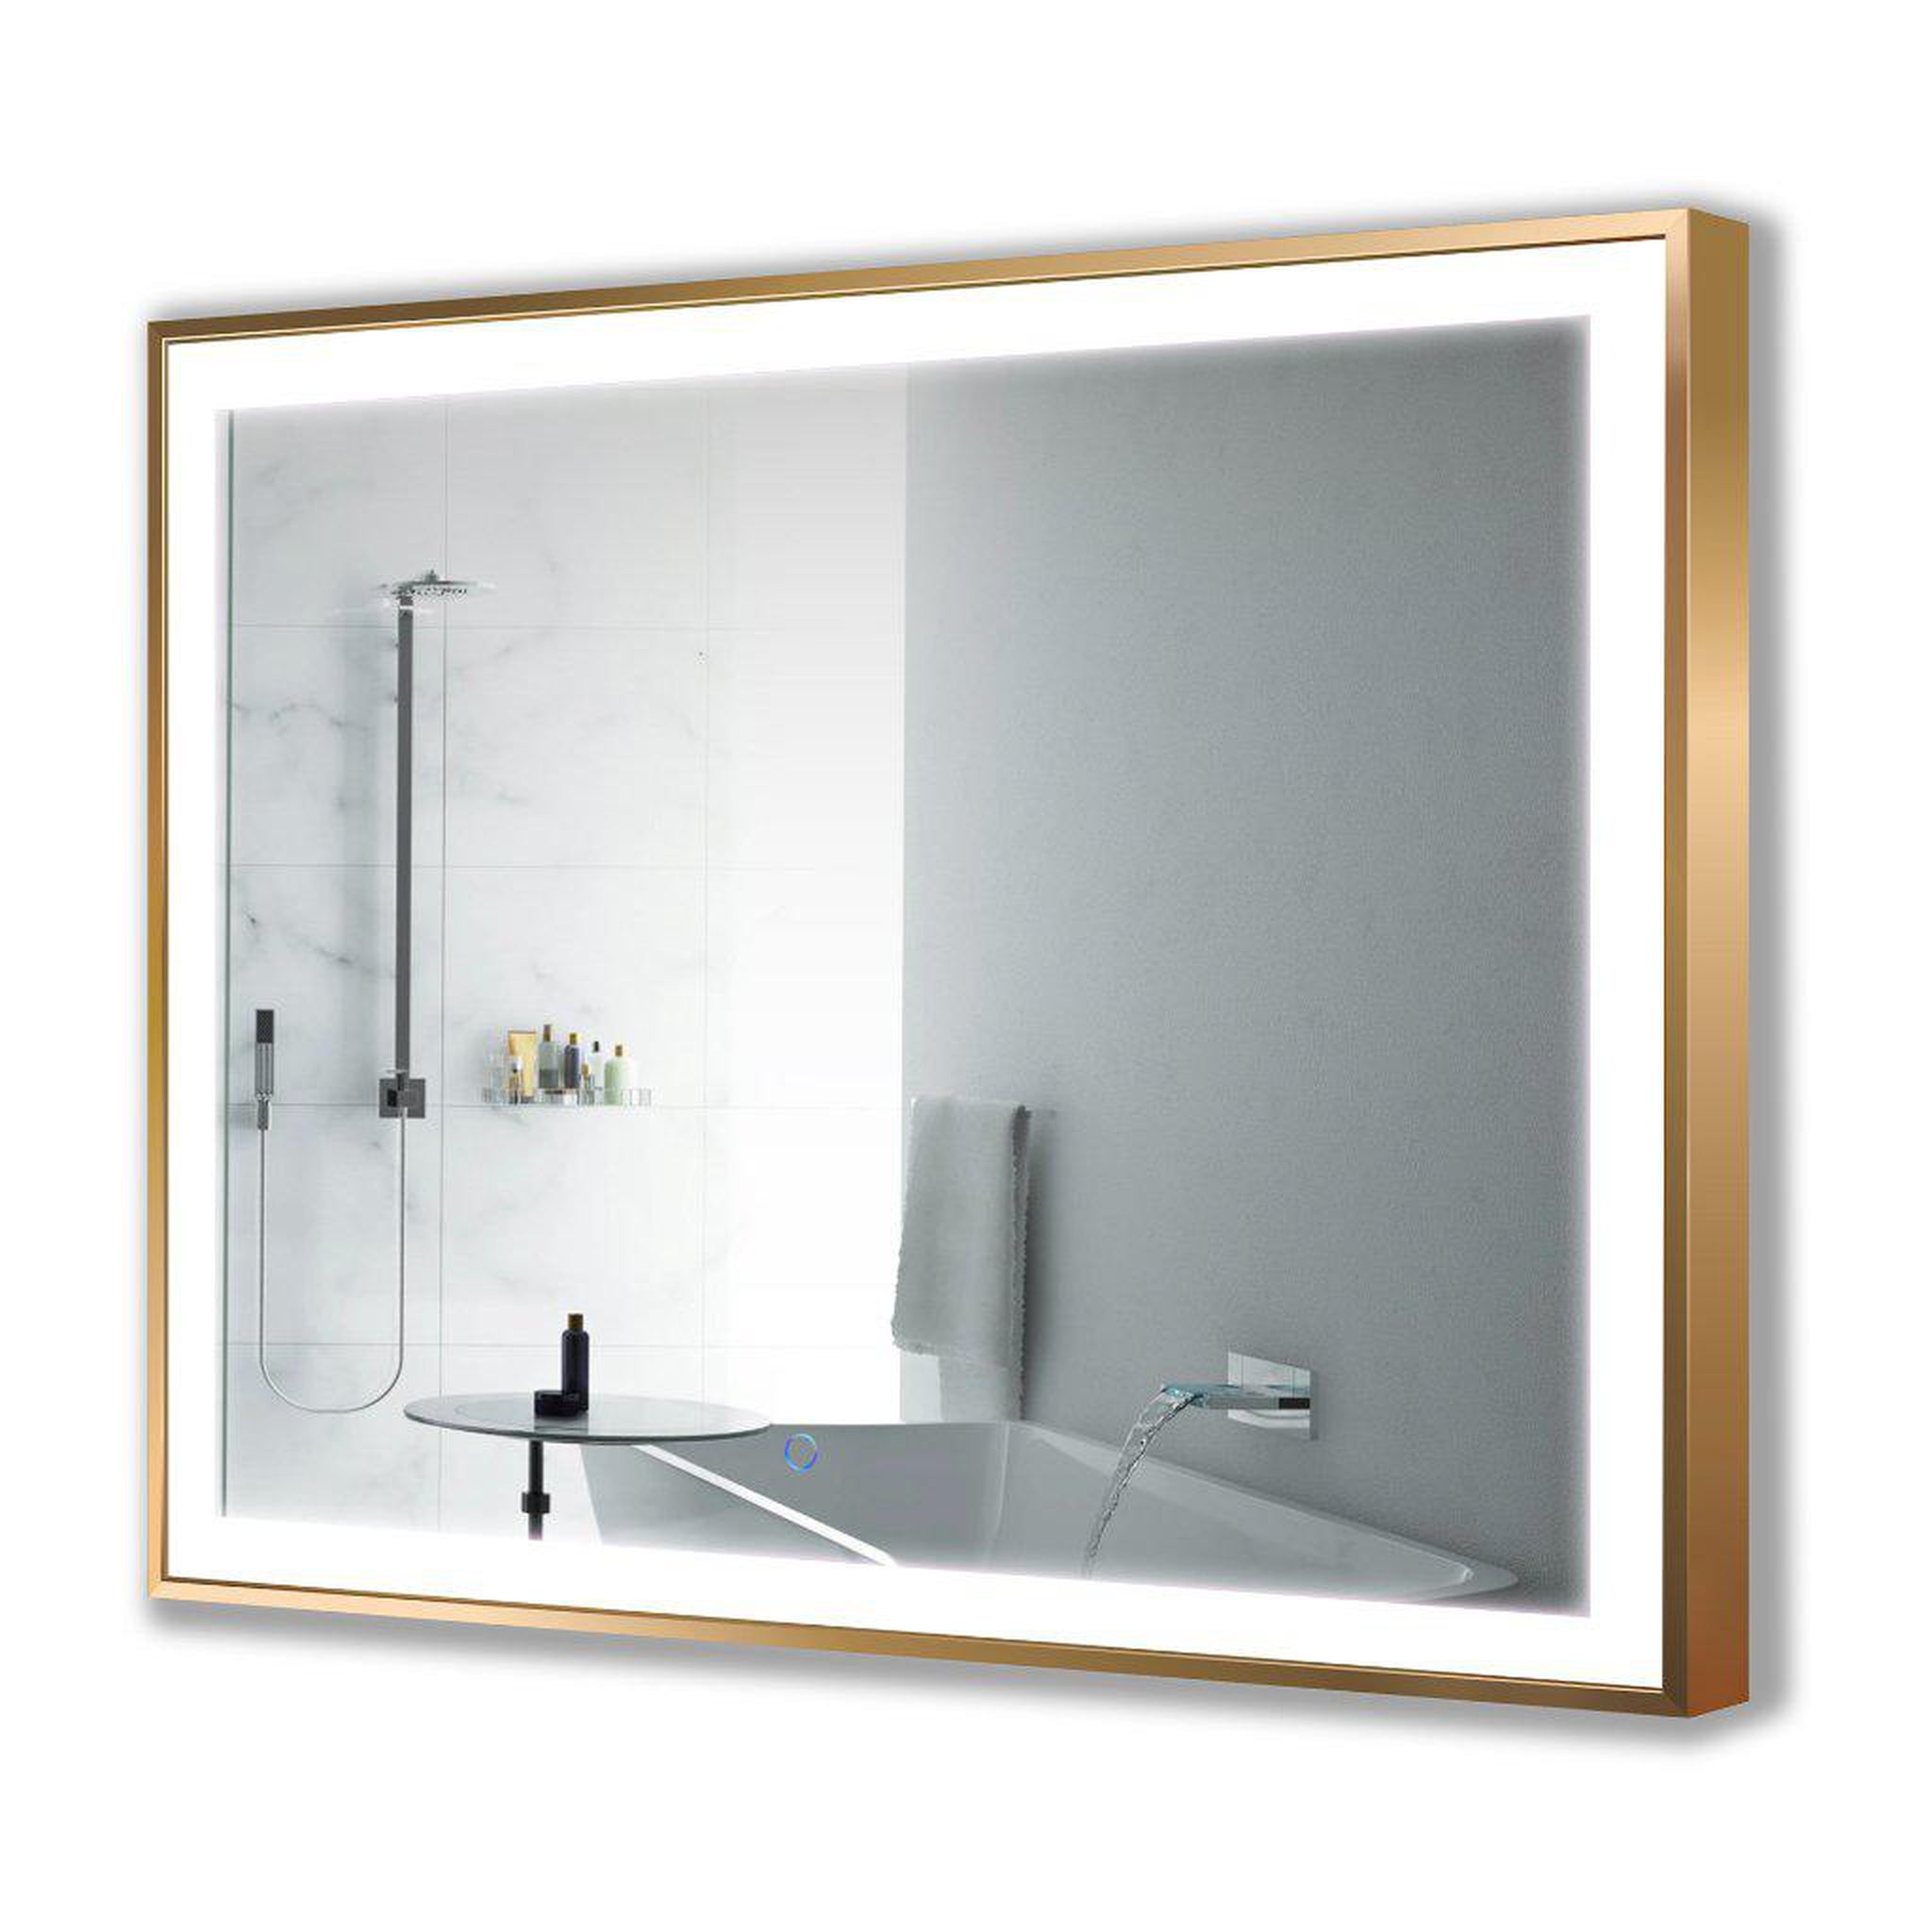 Krugg Reflections, Krugg Reflections Soho 48" x 36" 5000K Rectangular Matte Gold Wall-Mounted Framed LED Bathroom Vanity Mirror With Built-in Defogger and Dimmer